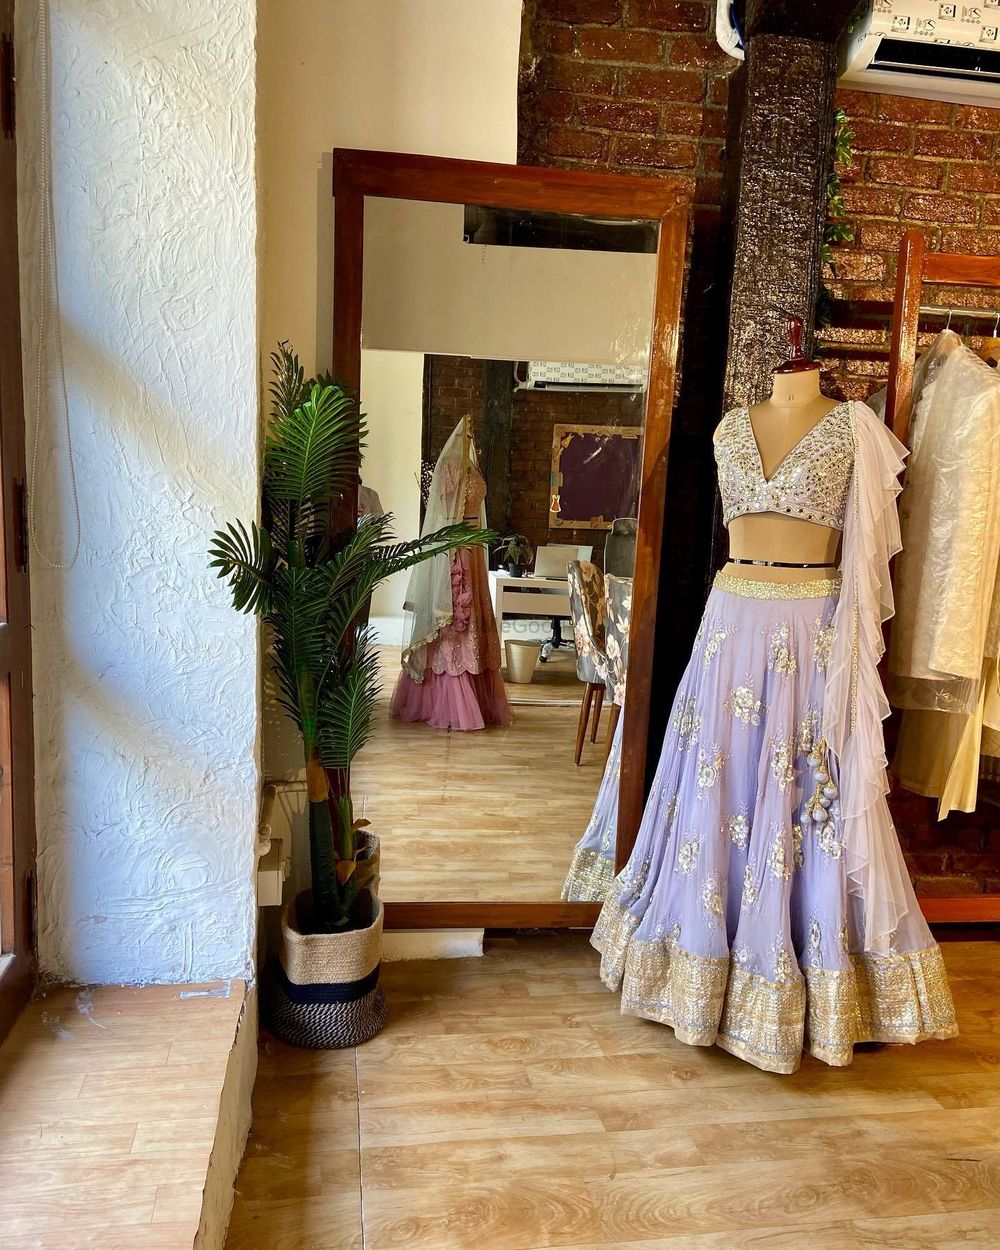 Photo By Priti Sahni Designs - Bridal Wear